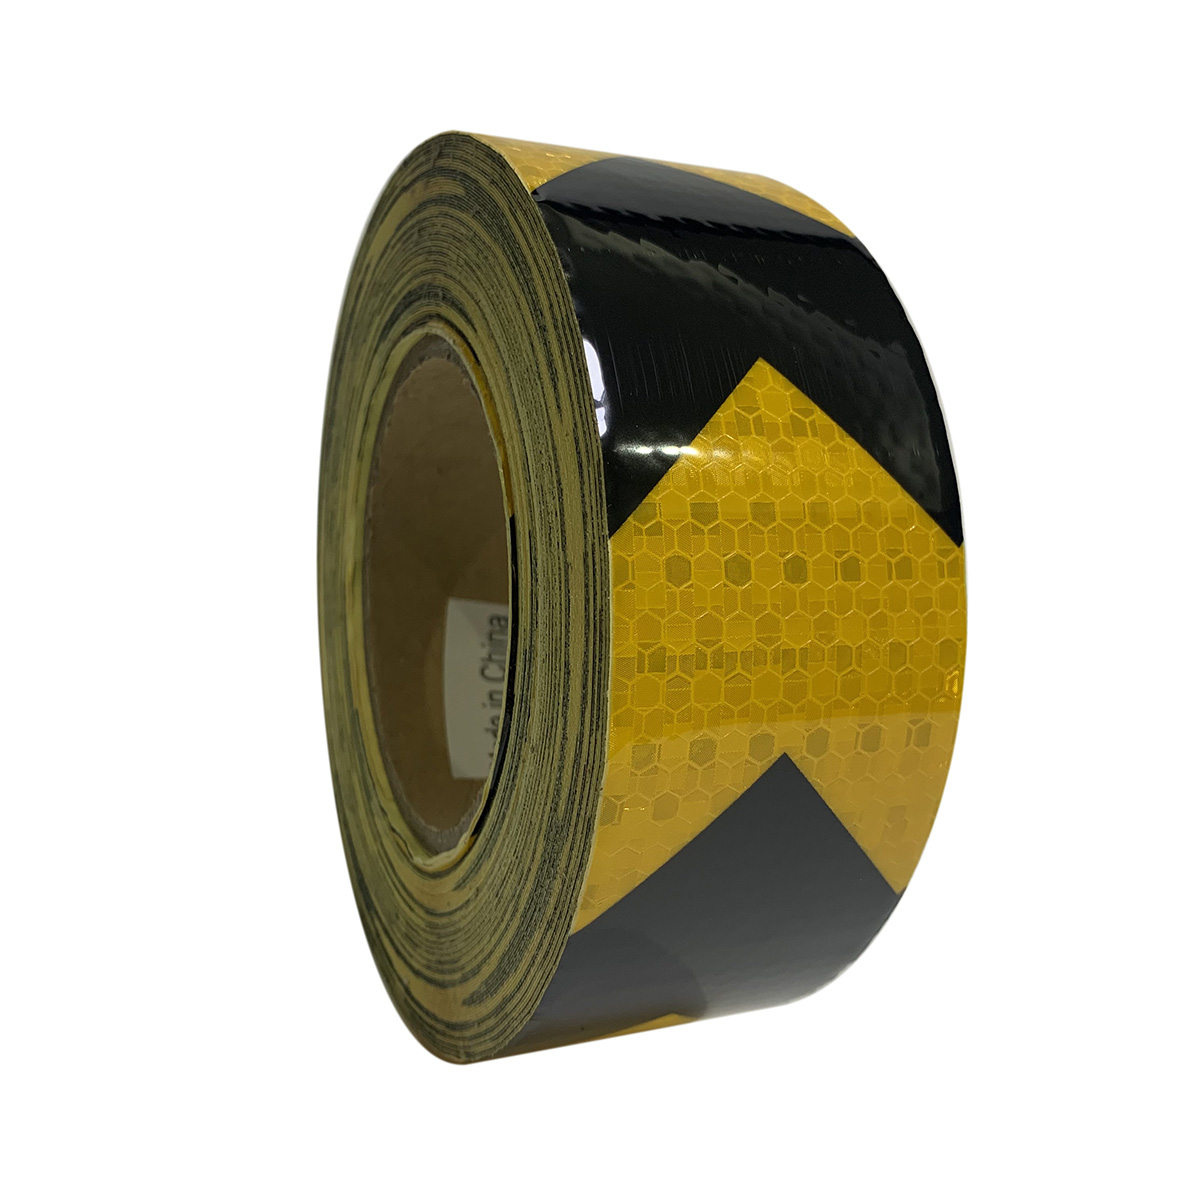 5cm*45m Black+Golden PVC Honeycomb Arrow Reflective Tape 